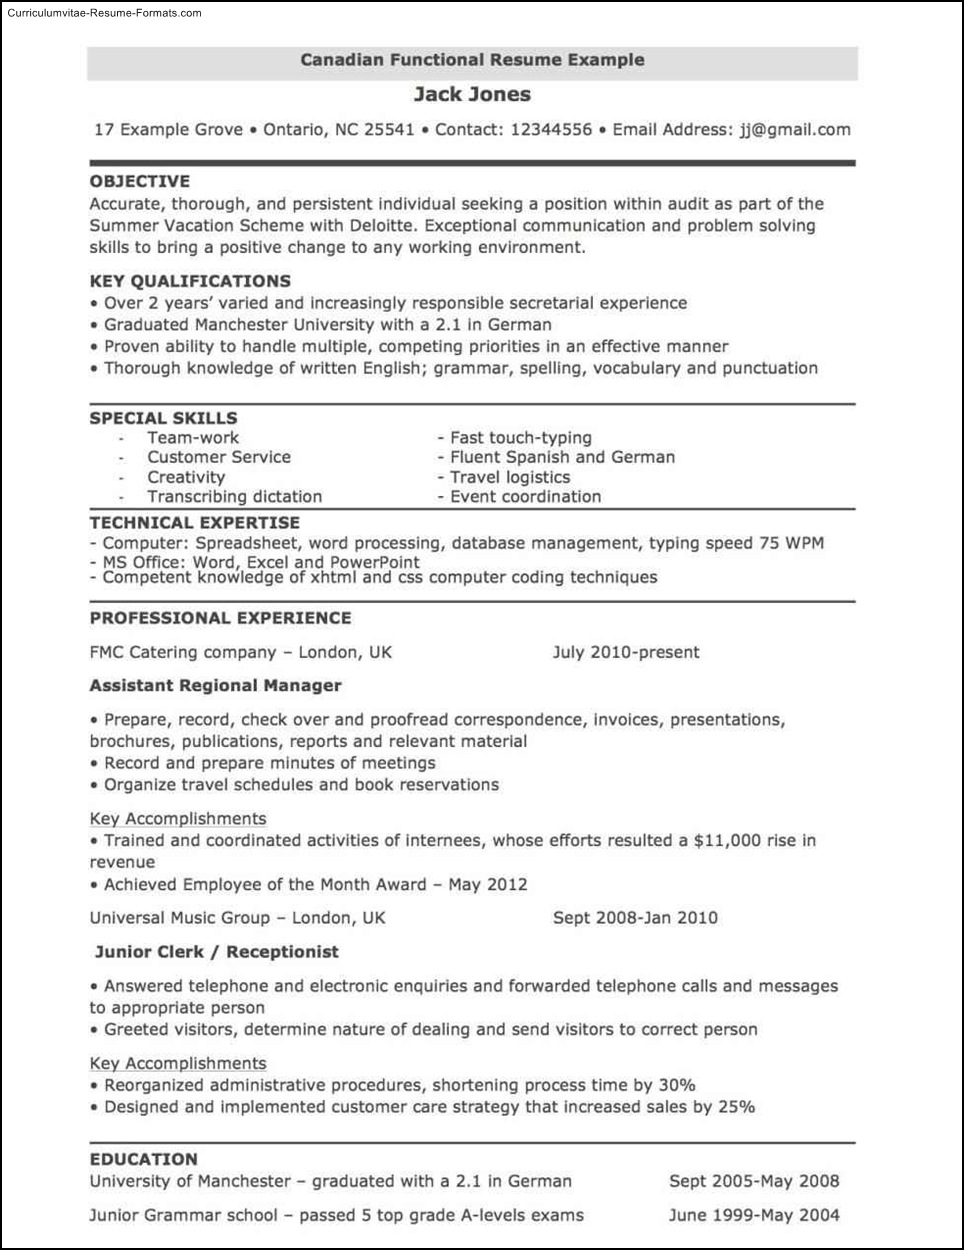 canadian resume format doc download